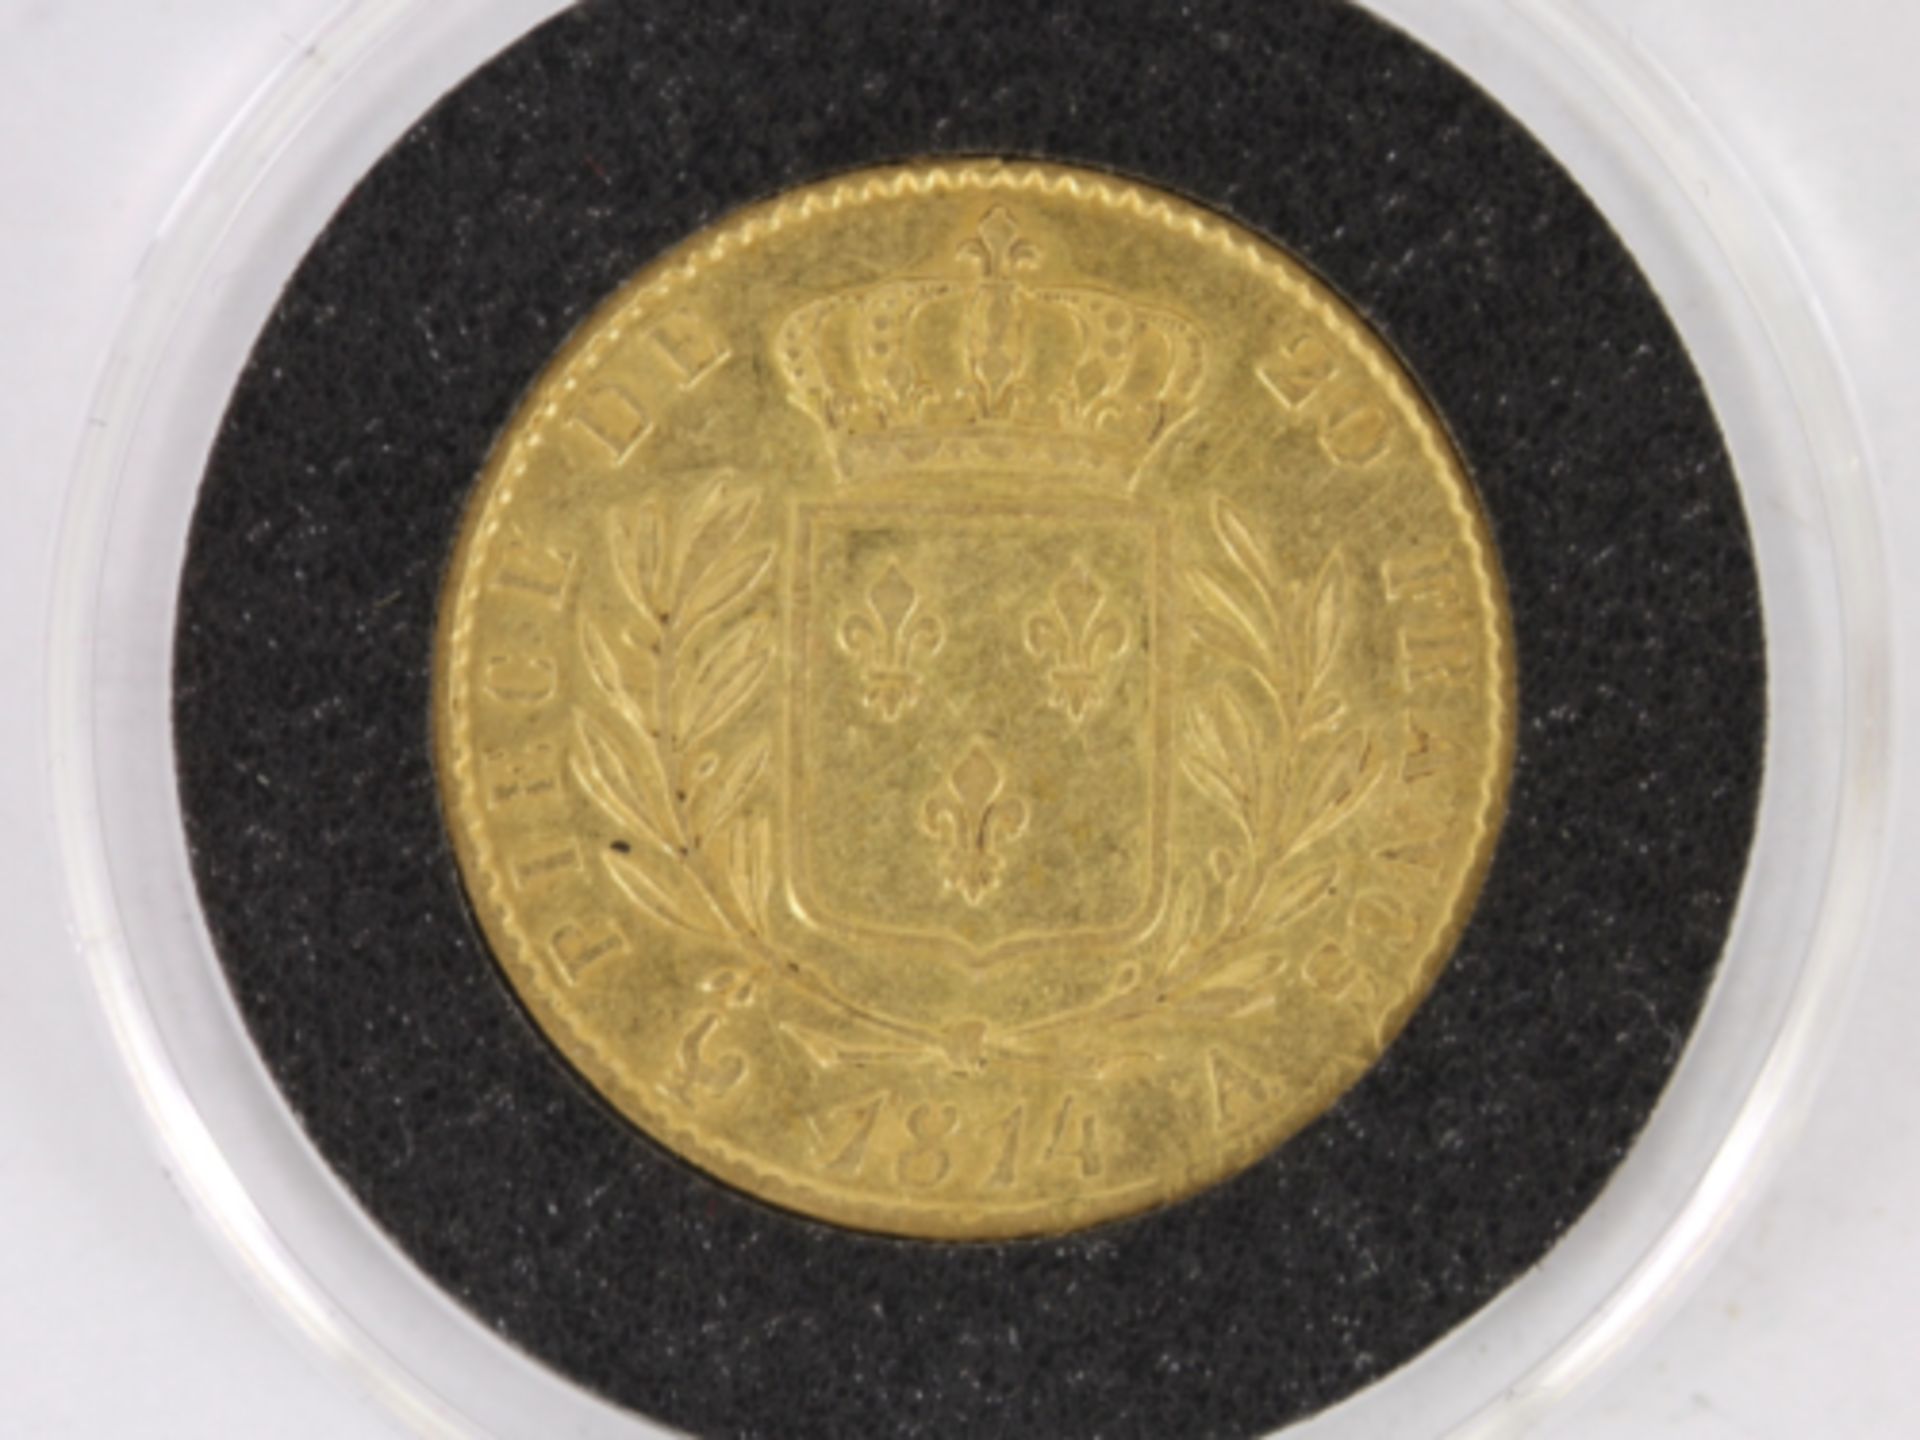 KING LOUIS XVIII GOLD TWENTY FRANCS 1814 COIN PARIS HERITAGE RELEASE CB84 - Image 3 of 4